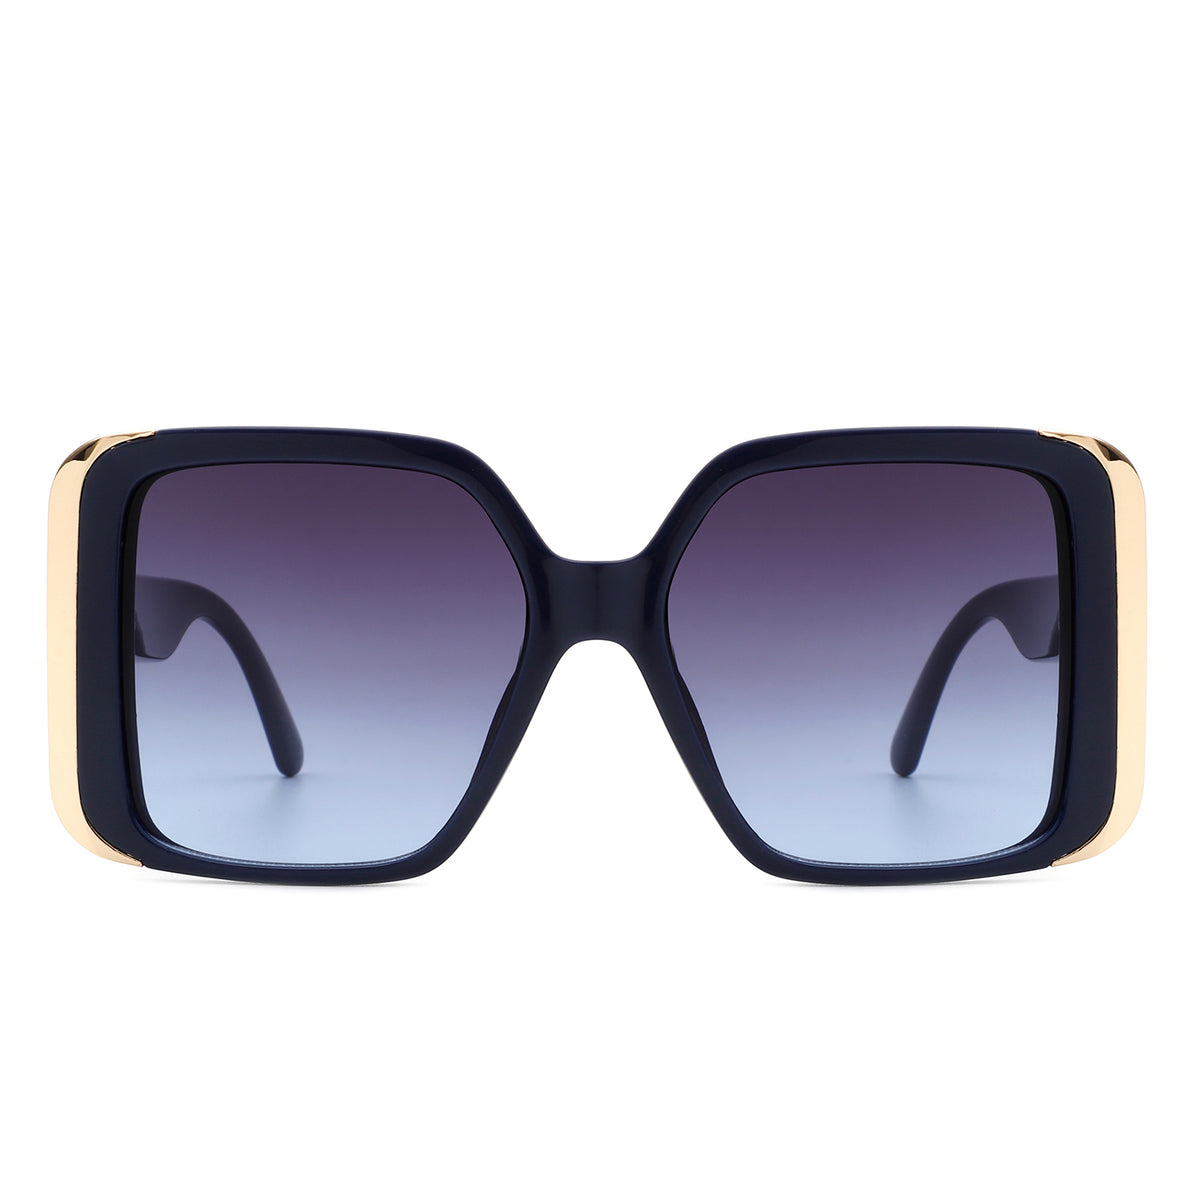 HS2106 - Classic Square Flat Top Fashion Women Oversize Sunglasses